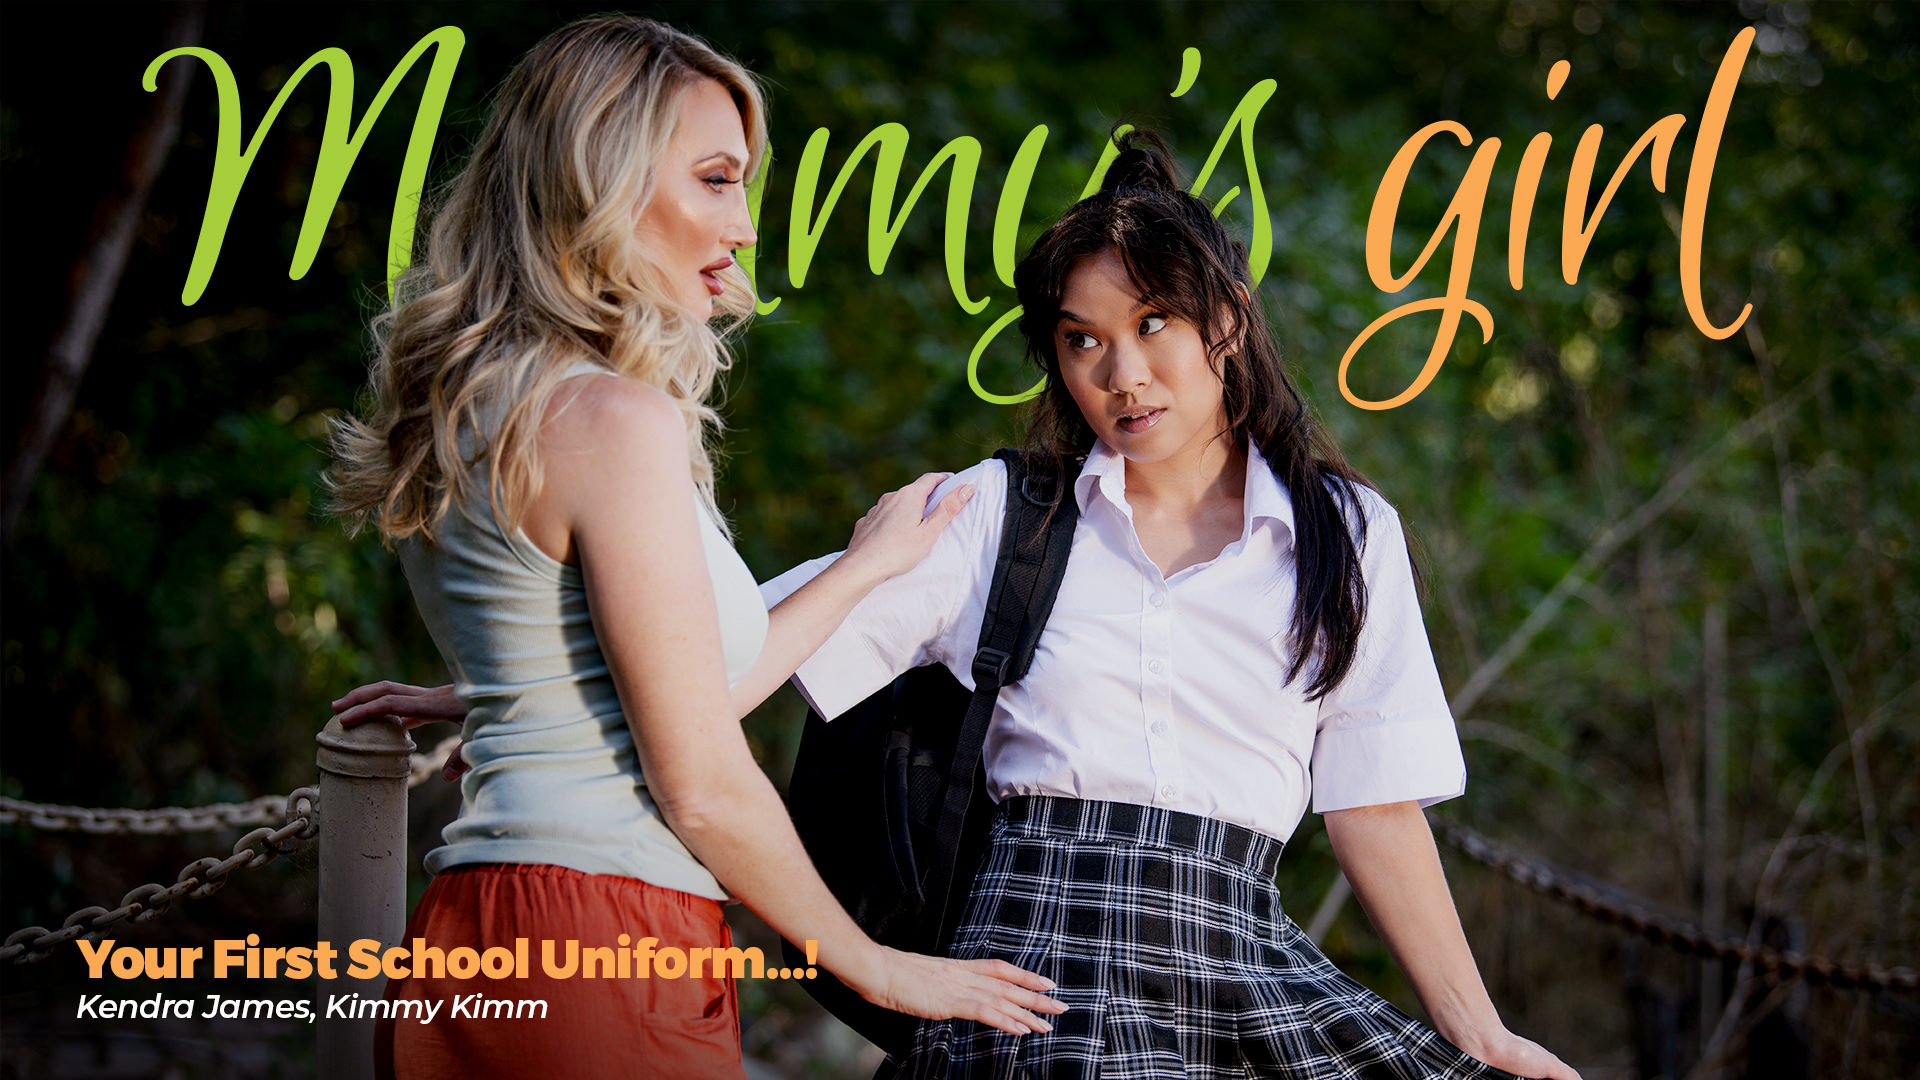 AdultTime MommysGirl Kendra James, Kimmy Kimm – Your First School Uniform…!